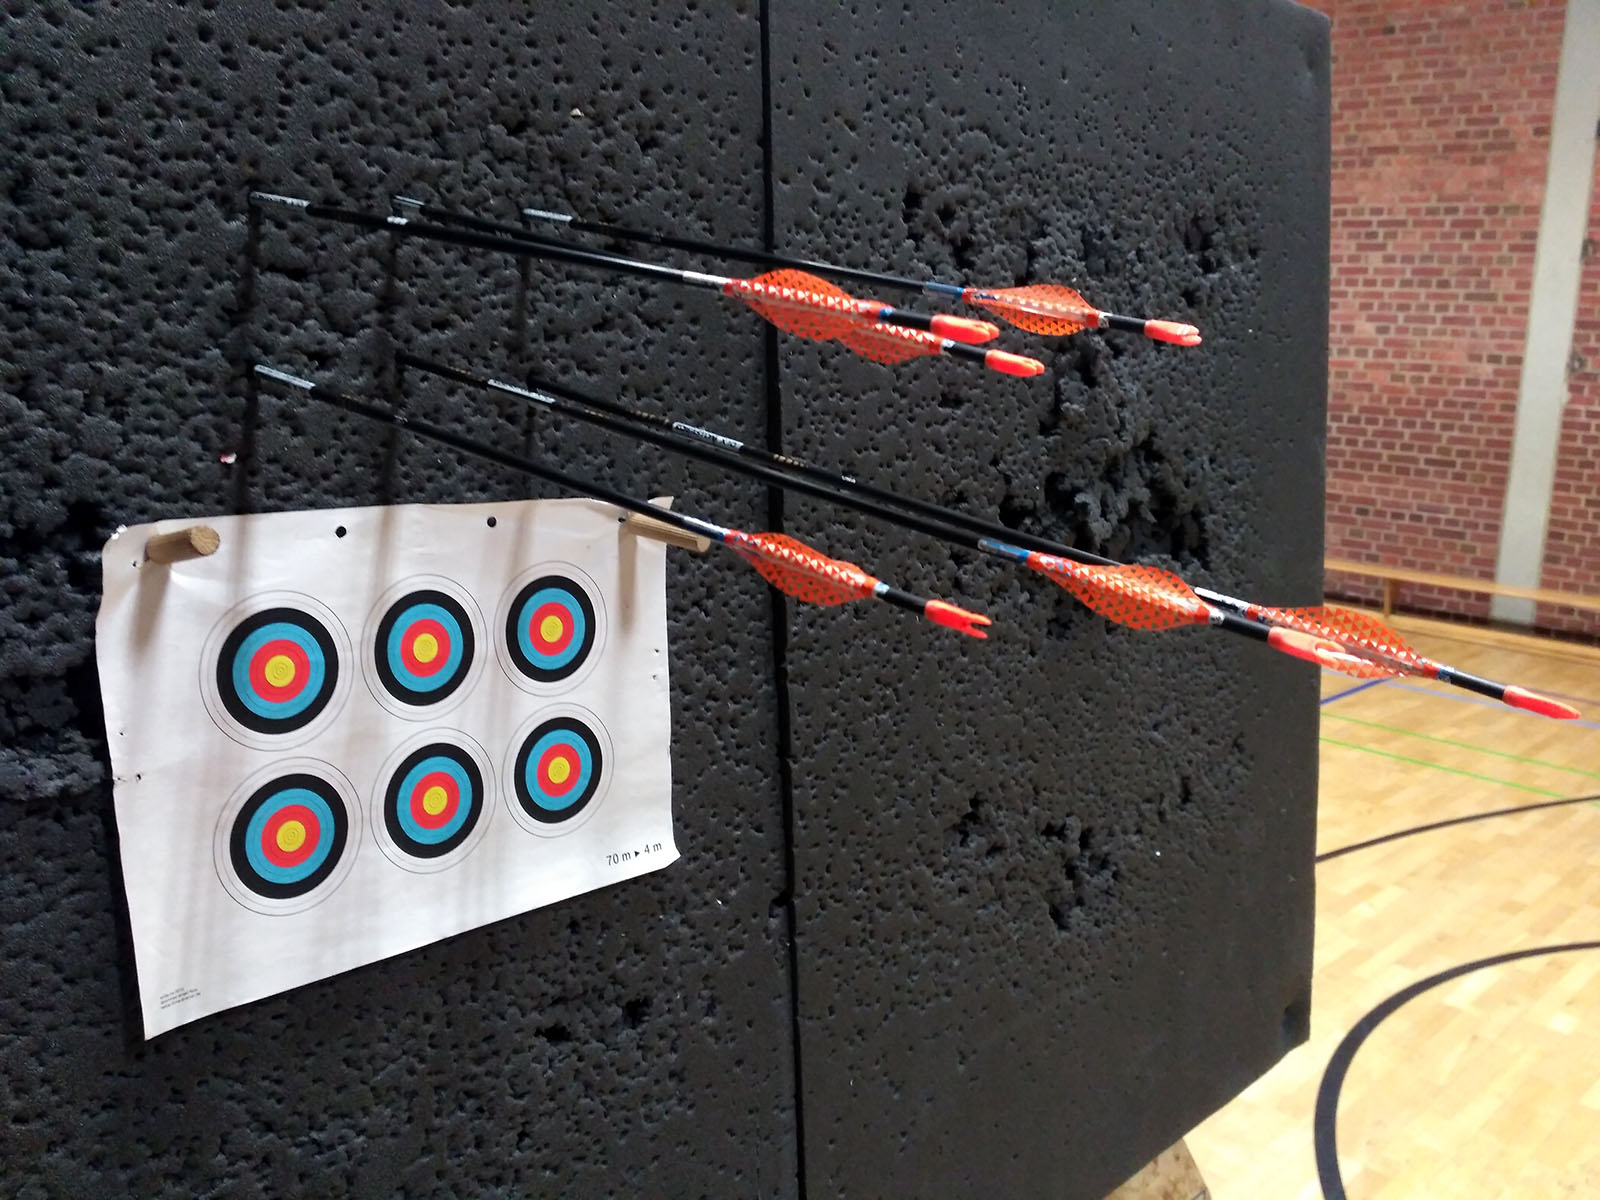 Scale Archery Target Generator